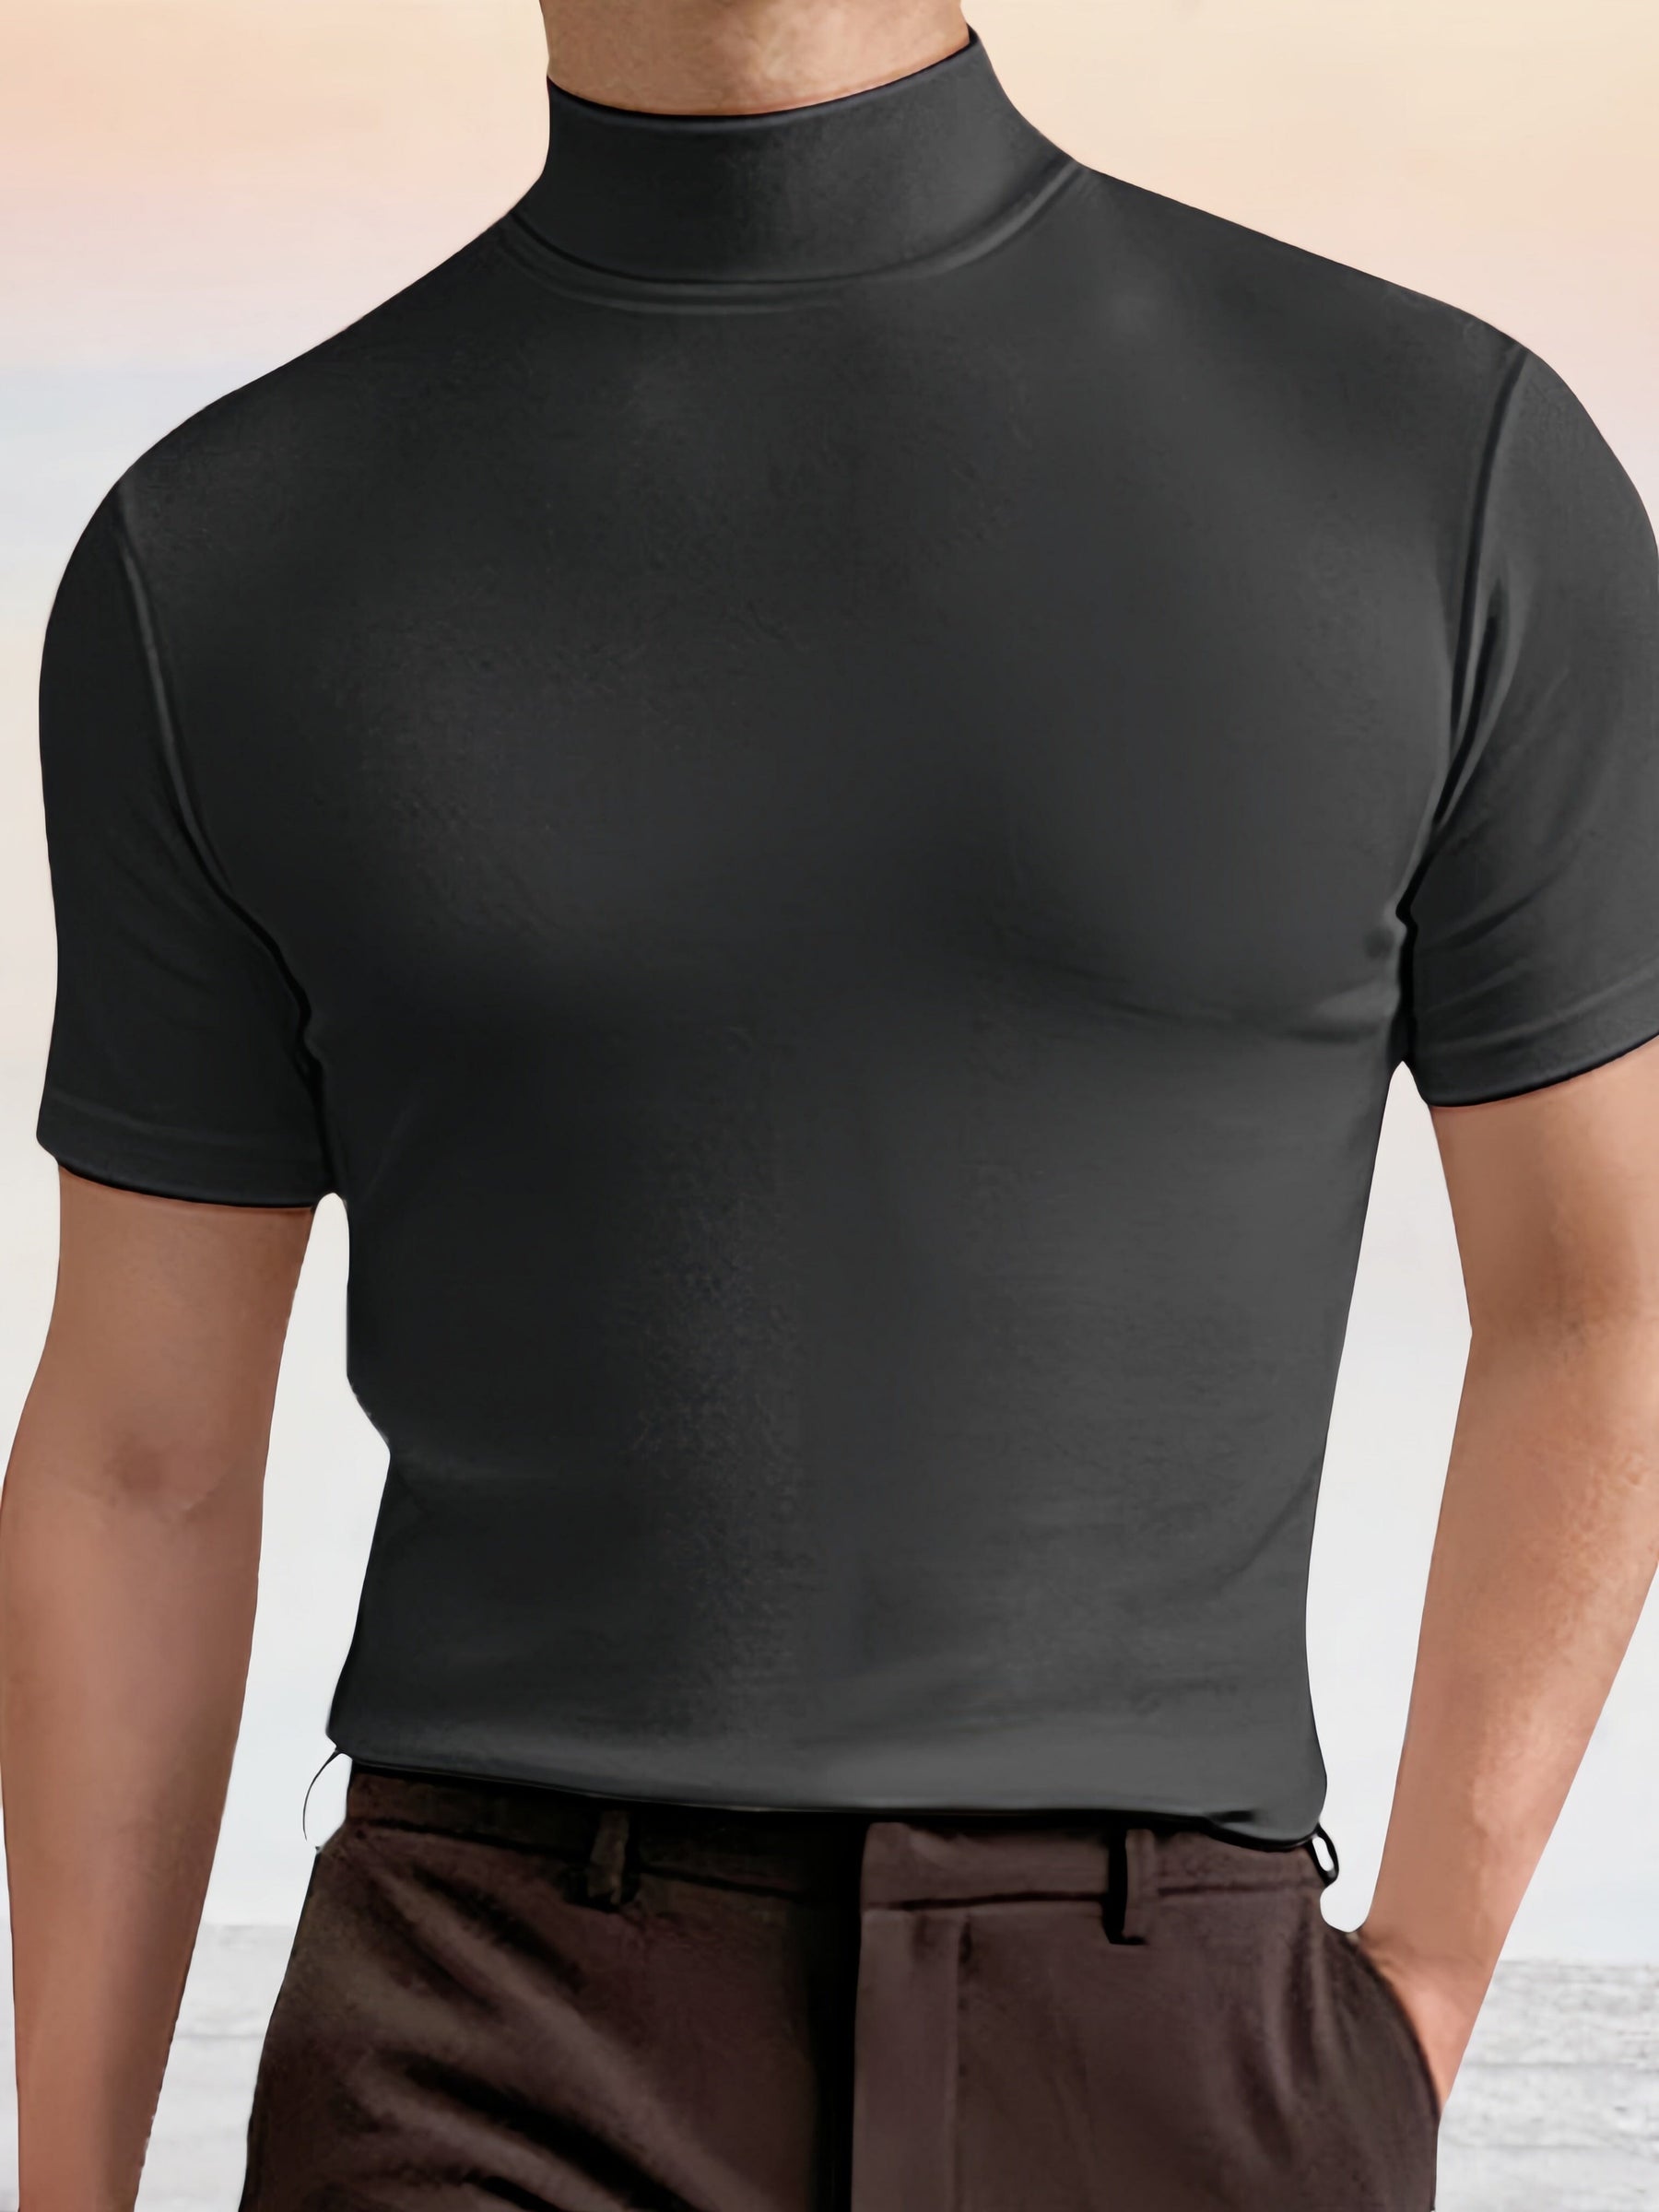 Slim Fit Short Sleeve Turtleneck Top Shirts coofandystore Black S 